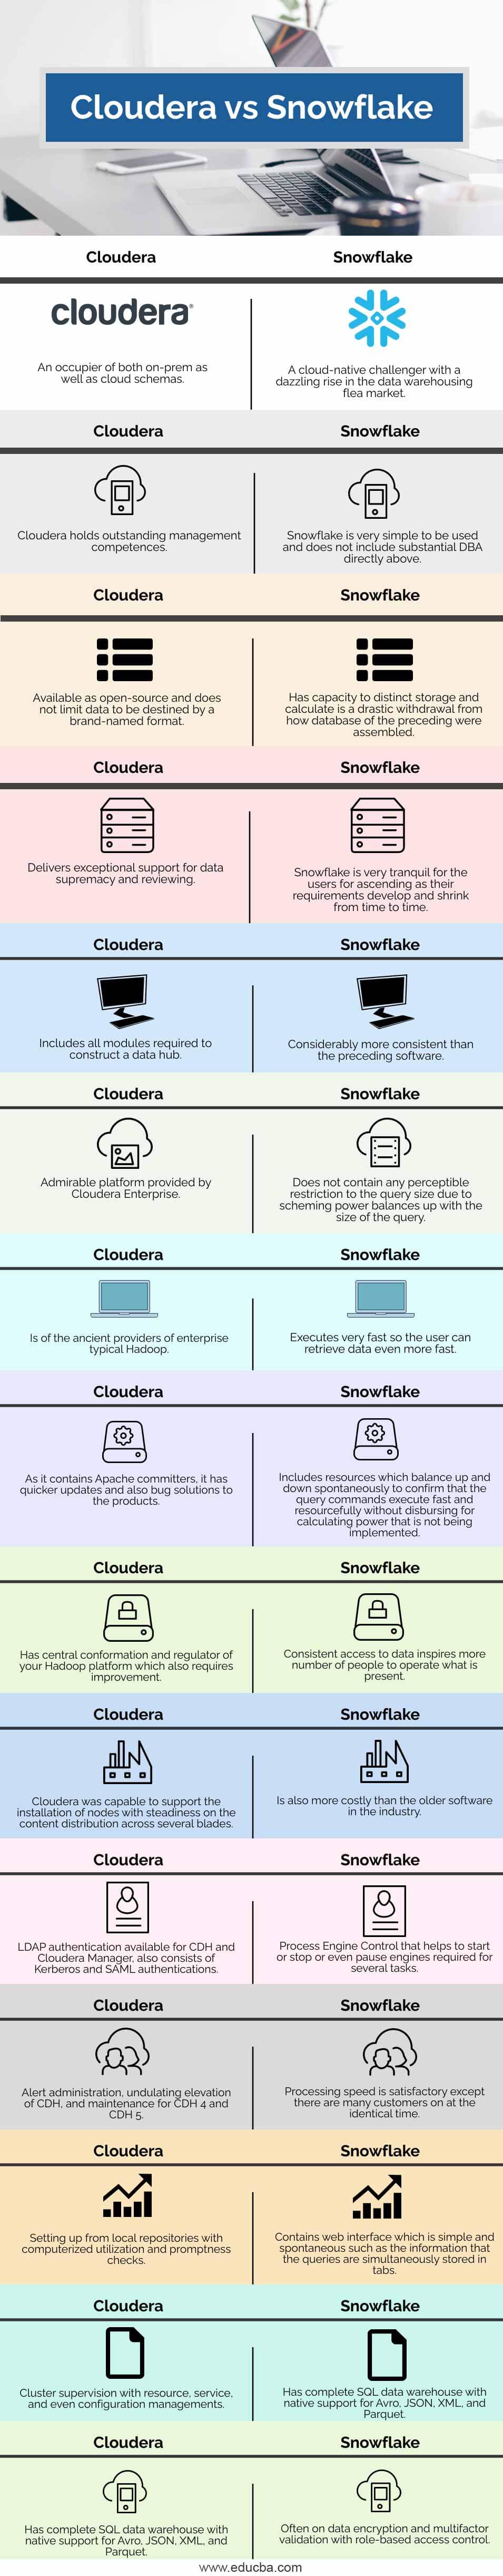 Cloudera-vs-Snowflake-info